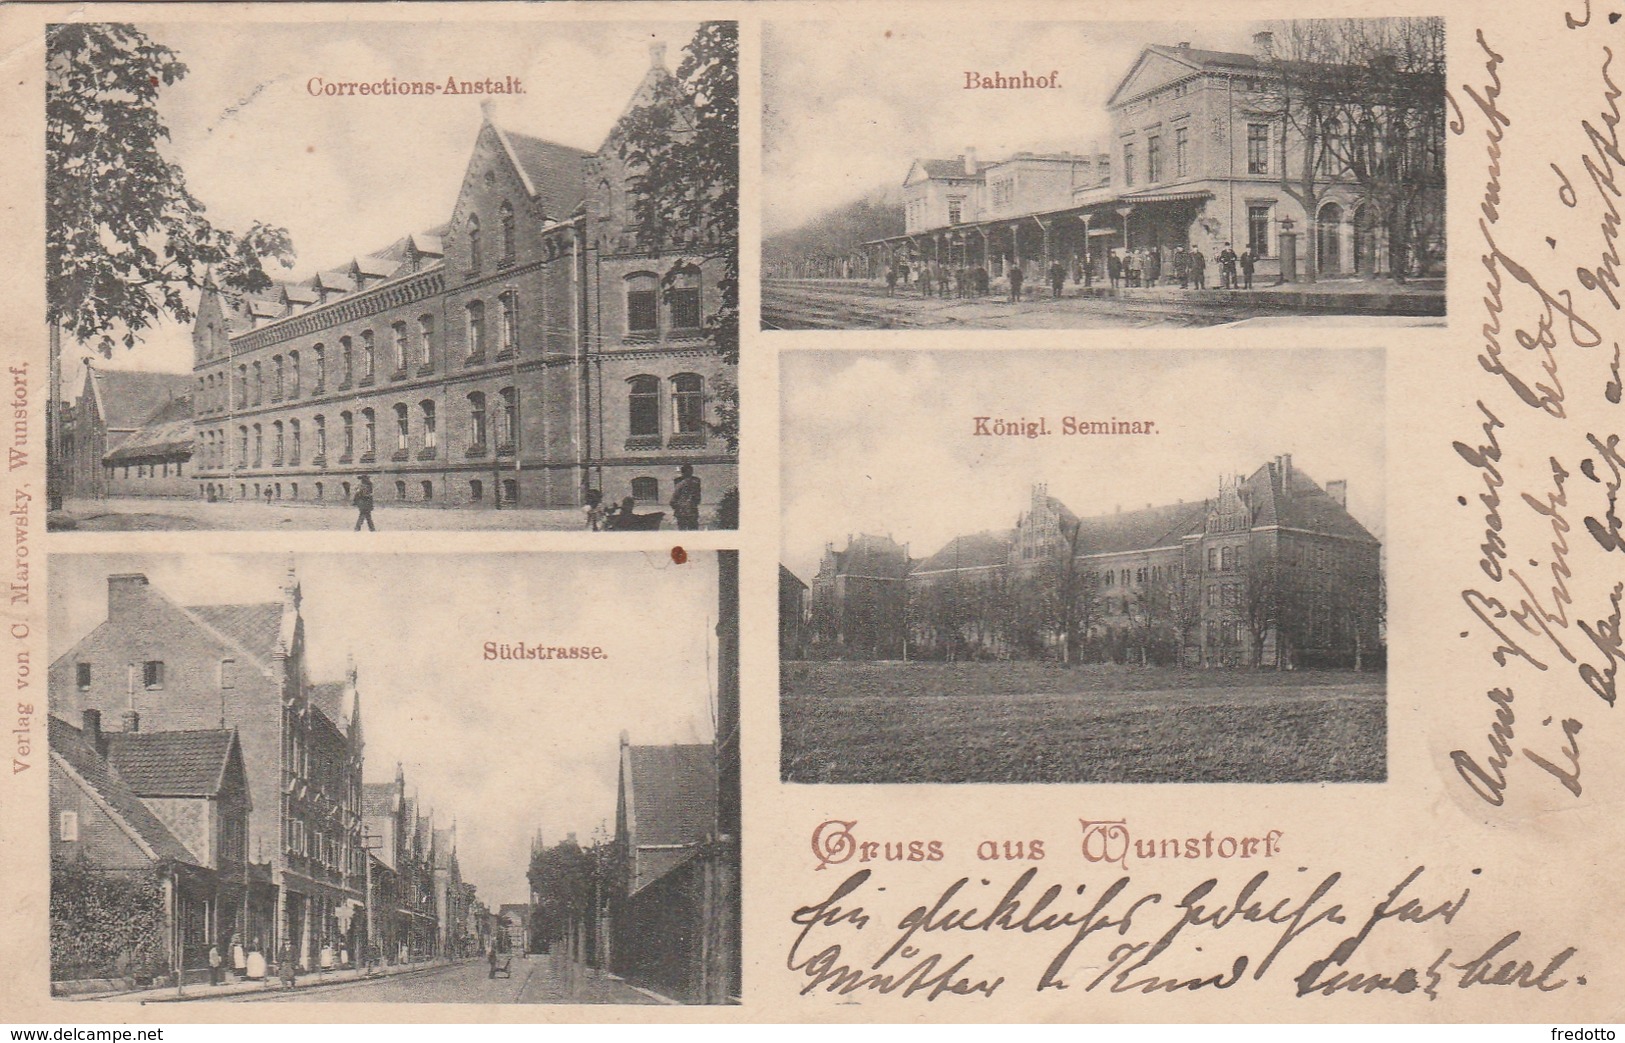 Gruss Aus Wunstorf.-Bahnhof-Südstrasse-König.Seminar-Corrections Anstalt.1899 - Wunstorf